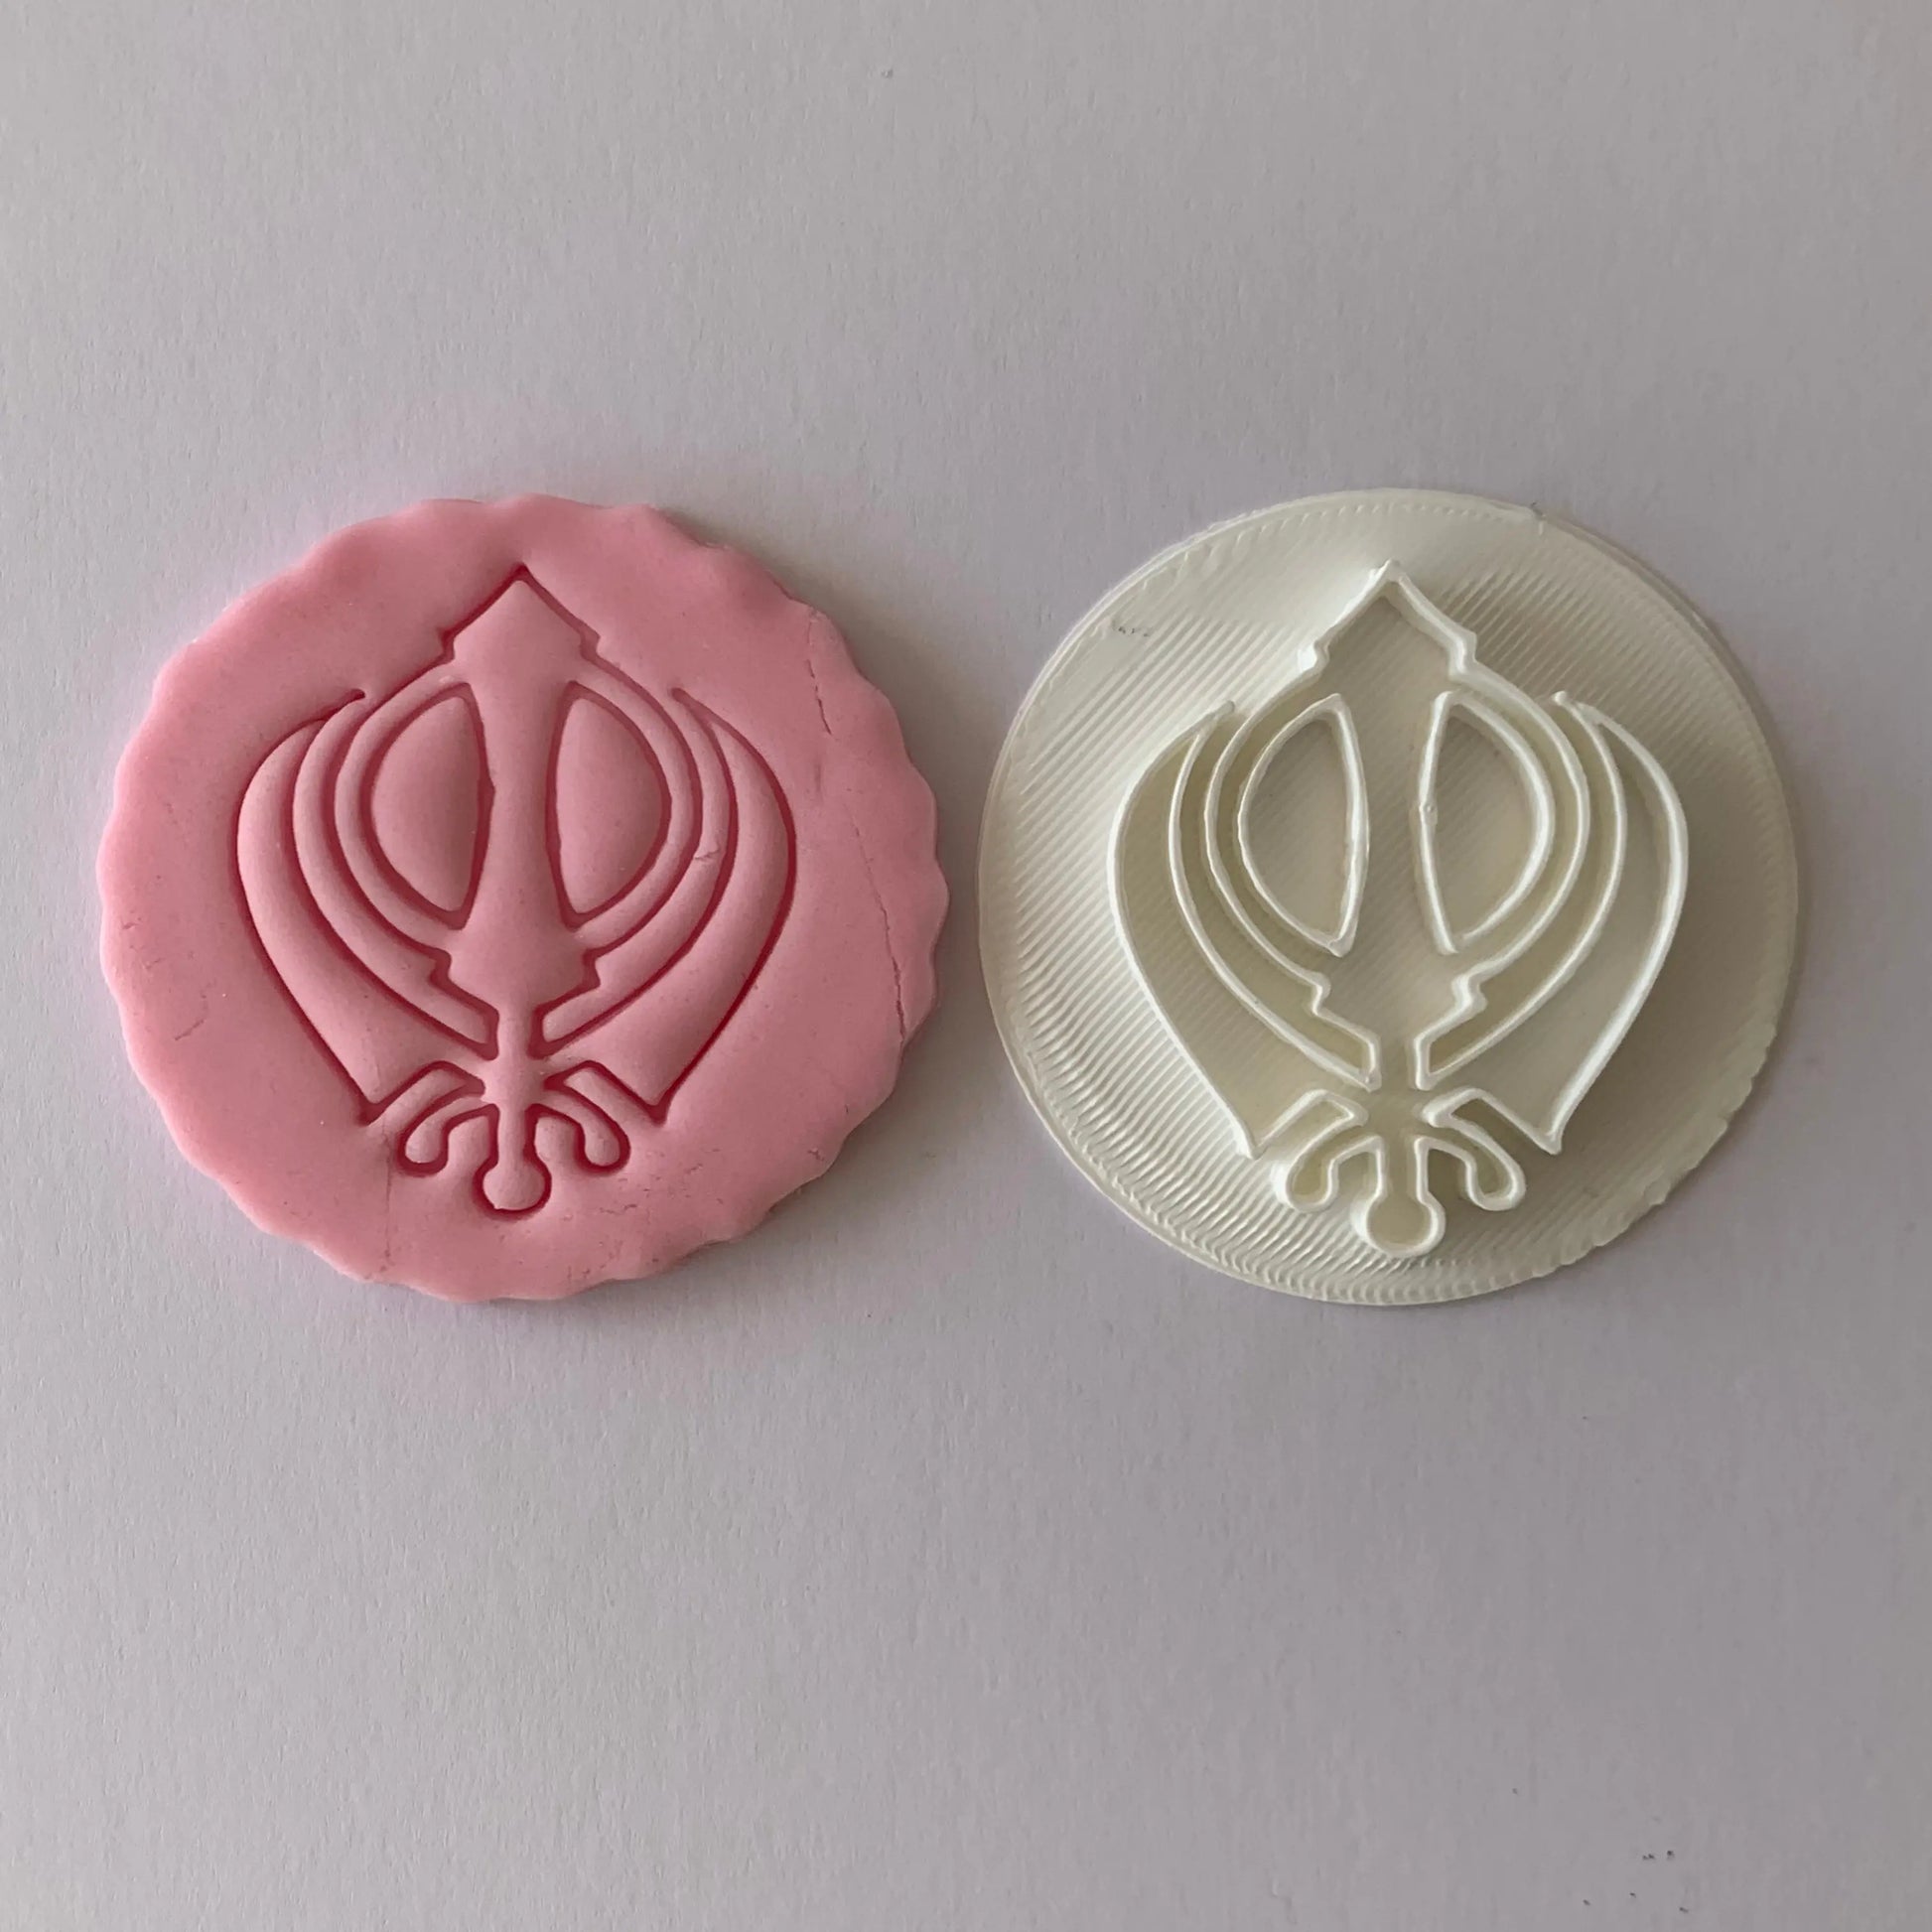 Khanda symbol stamp MEG cookie cutters